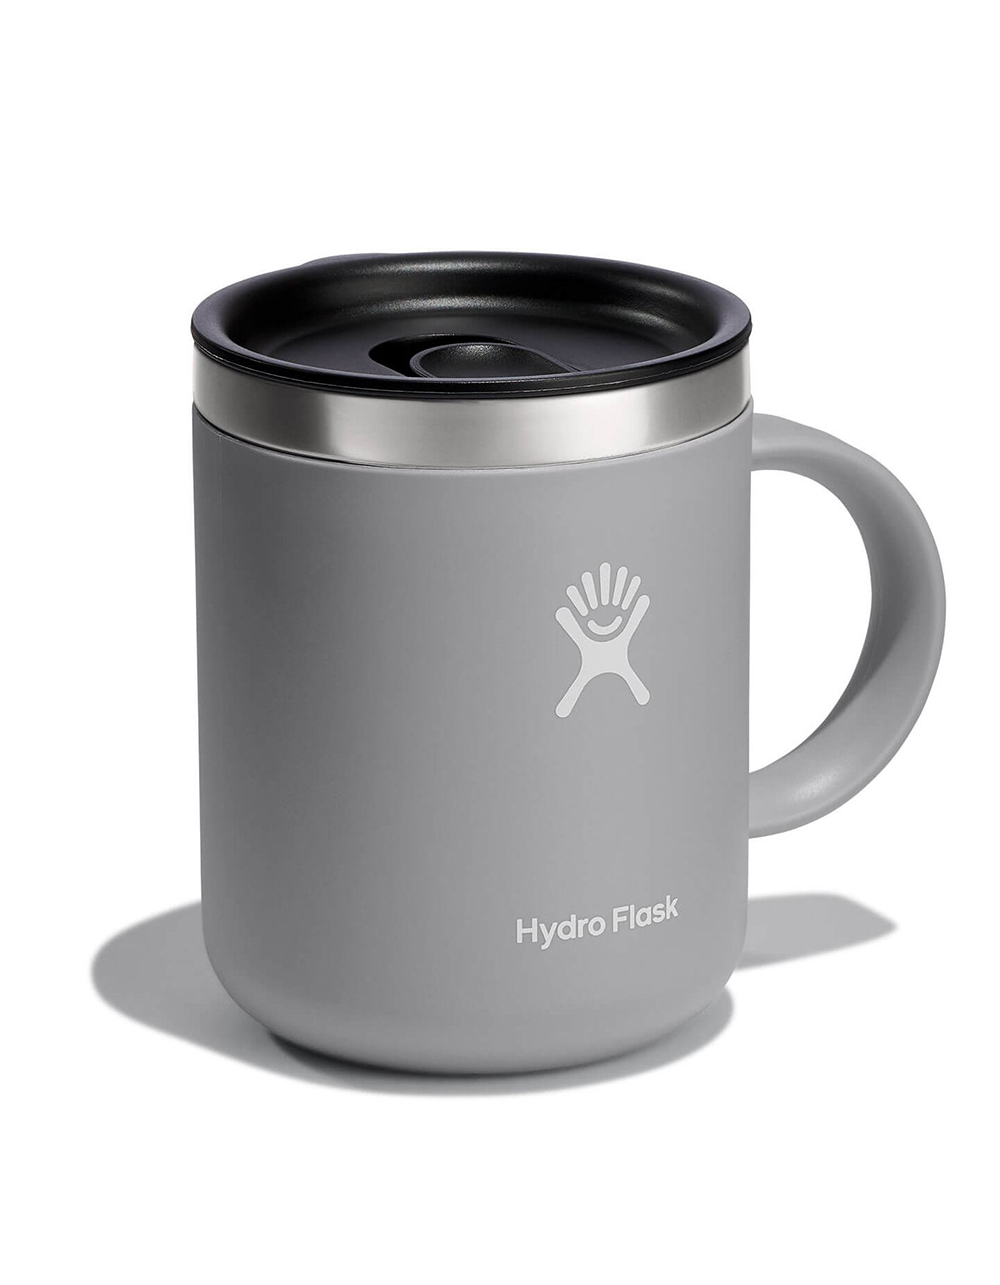 Hydro Flask For Coffee - Kau Coffee Mill